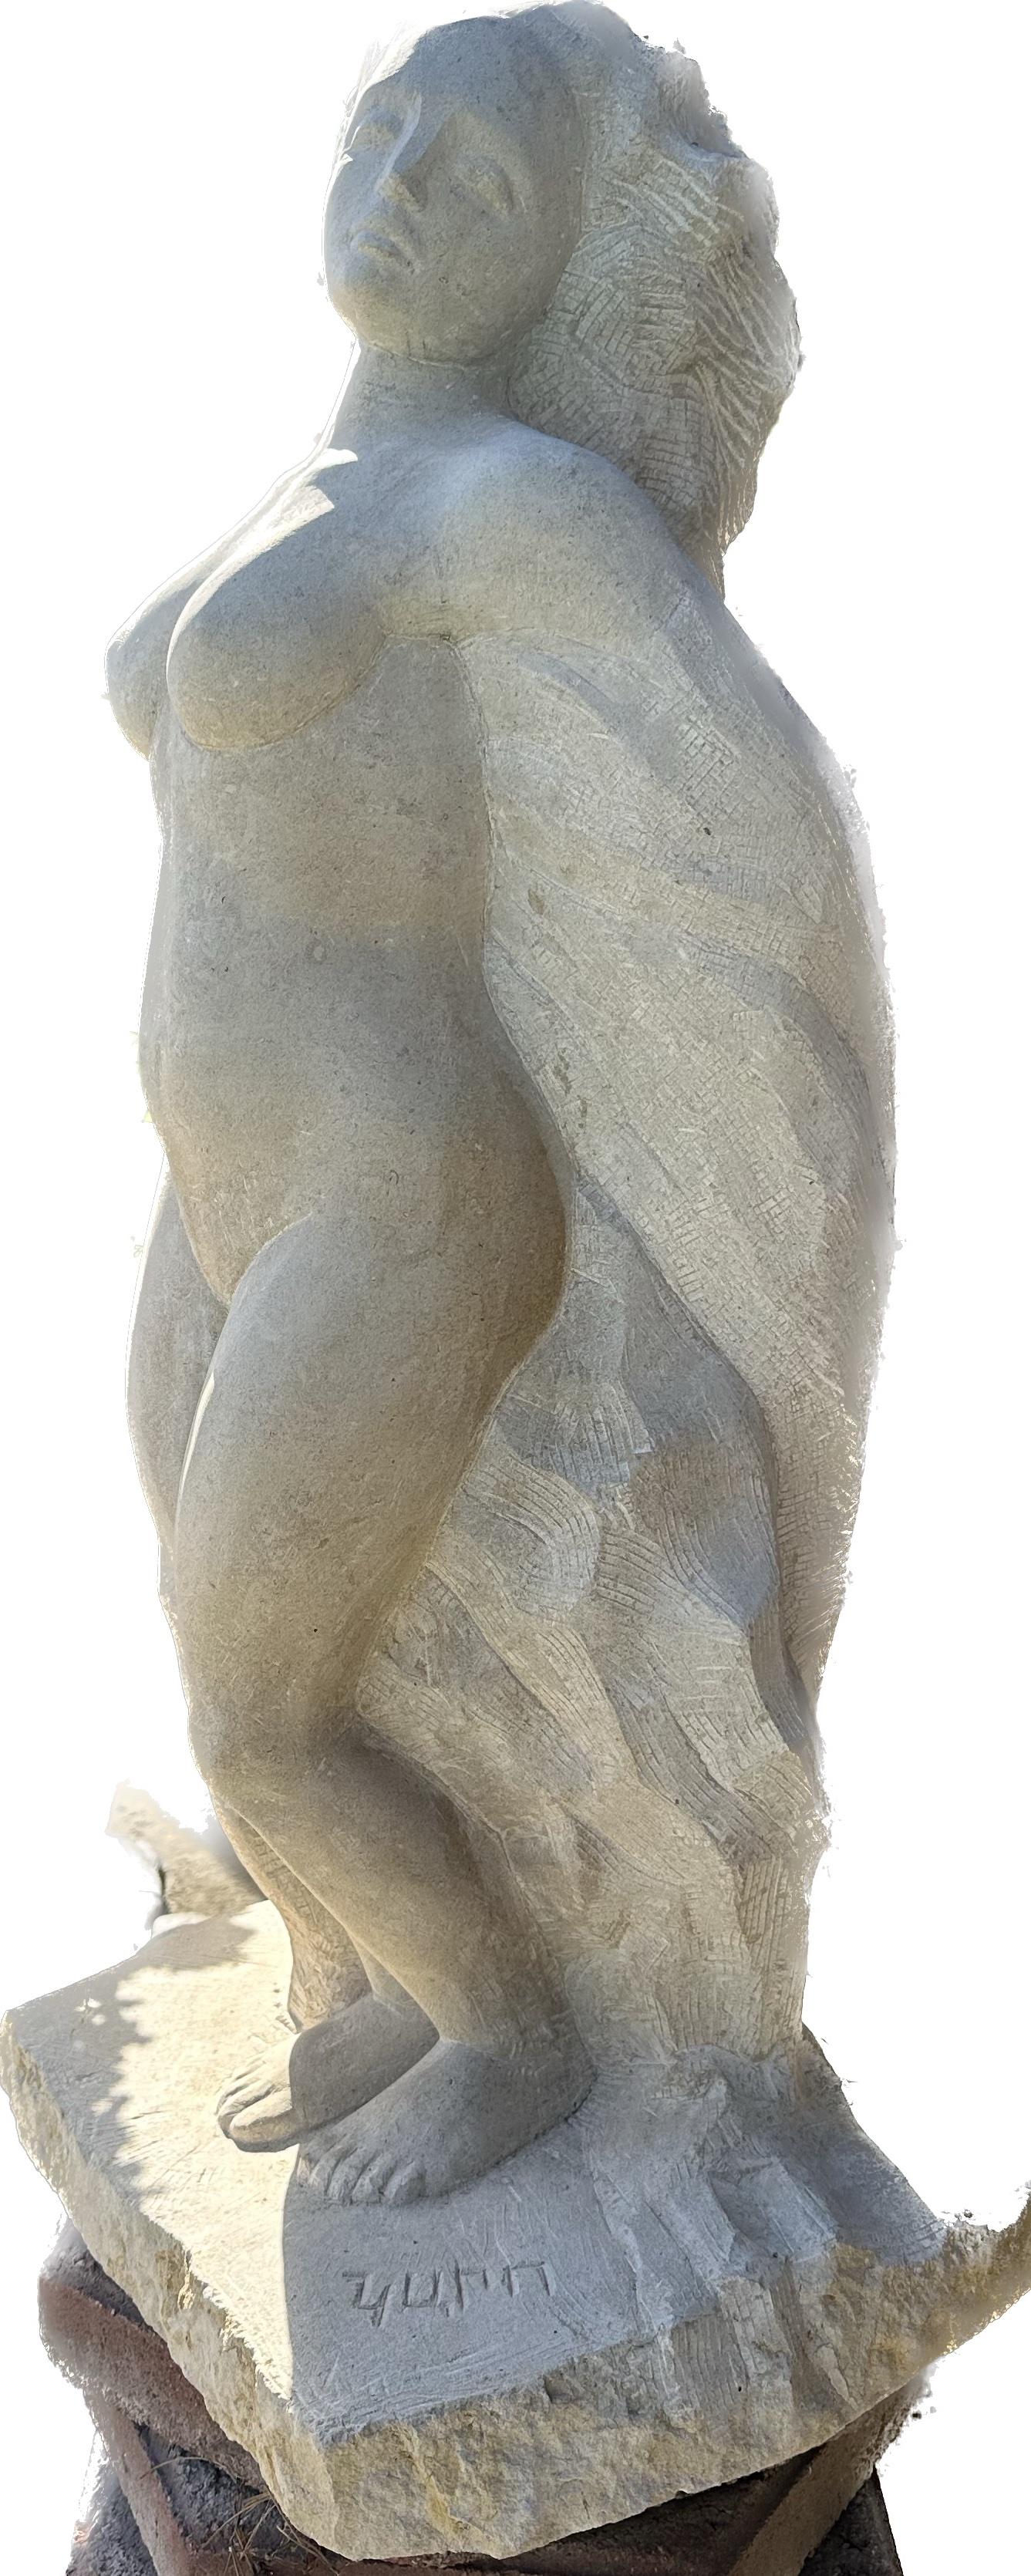 Femme nue, sculpture, pierre faite à la main par Garo - Sculpture de Karapet Balakeseryan  (Garo)